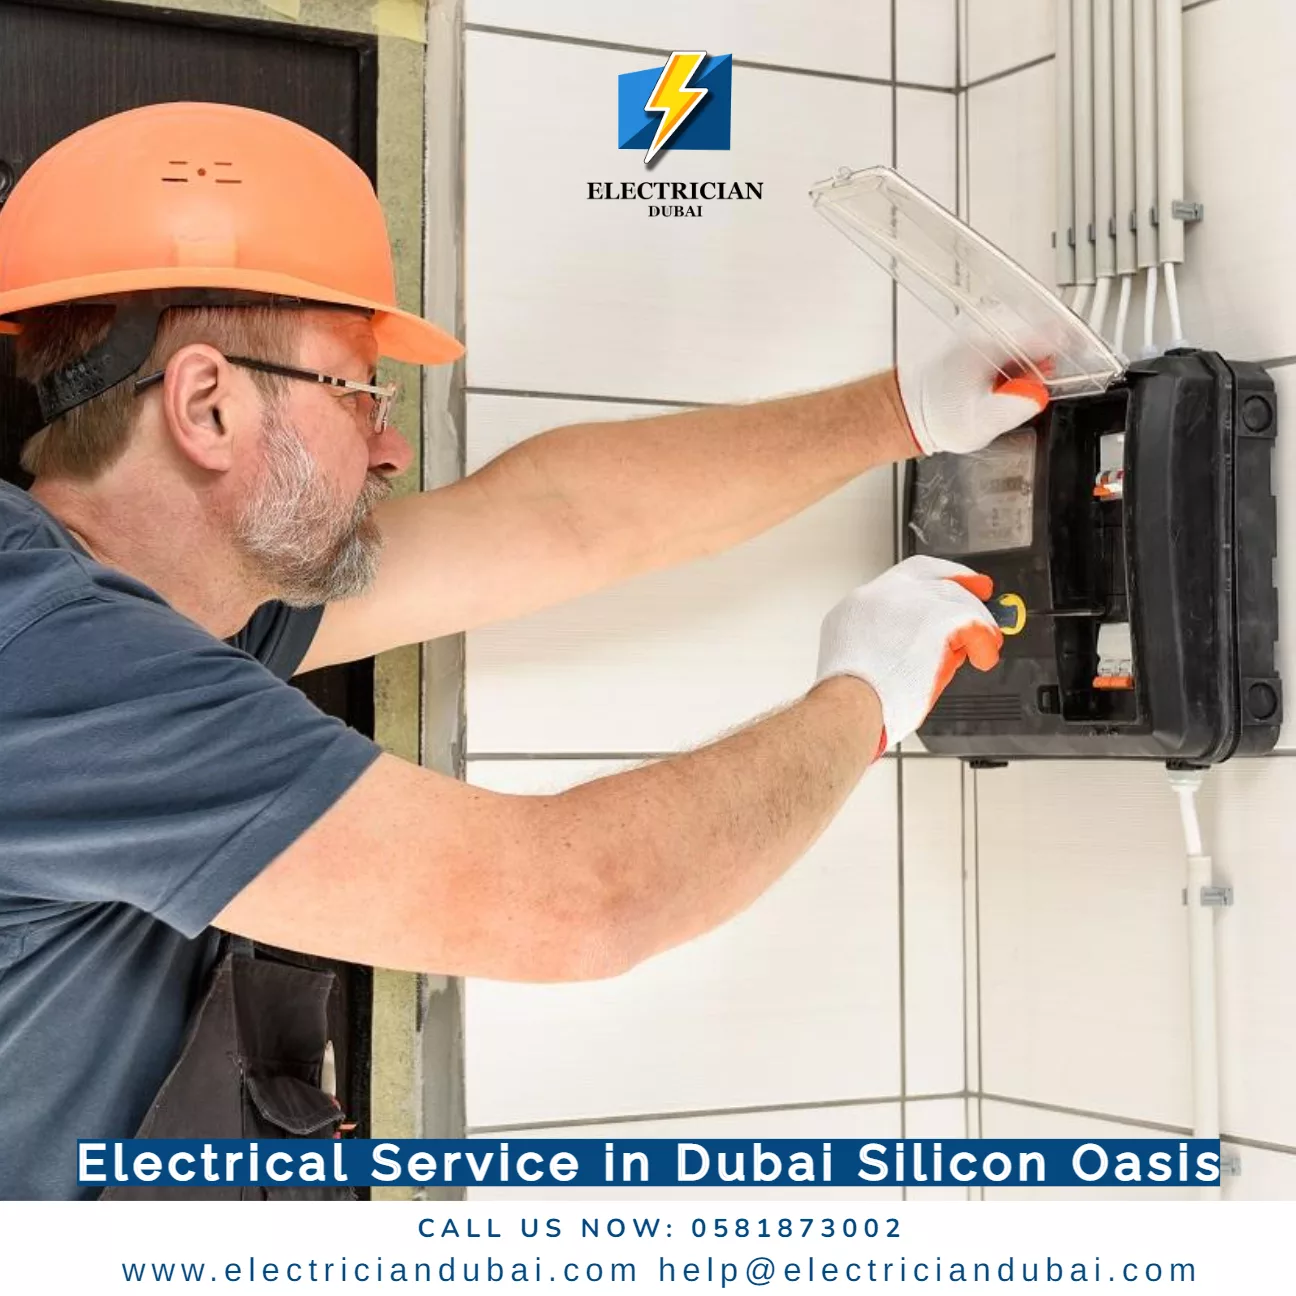 Electrical Service in Dubai Silicon Oasis